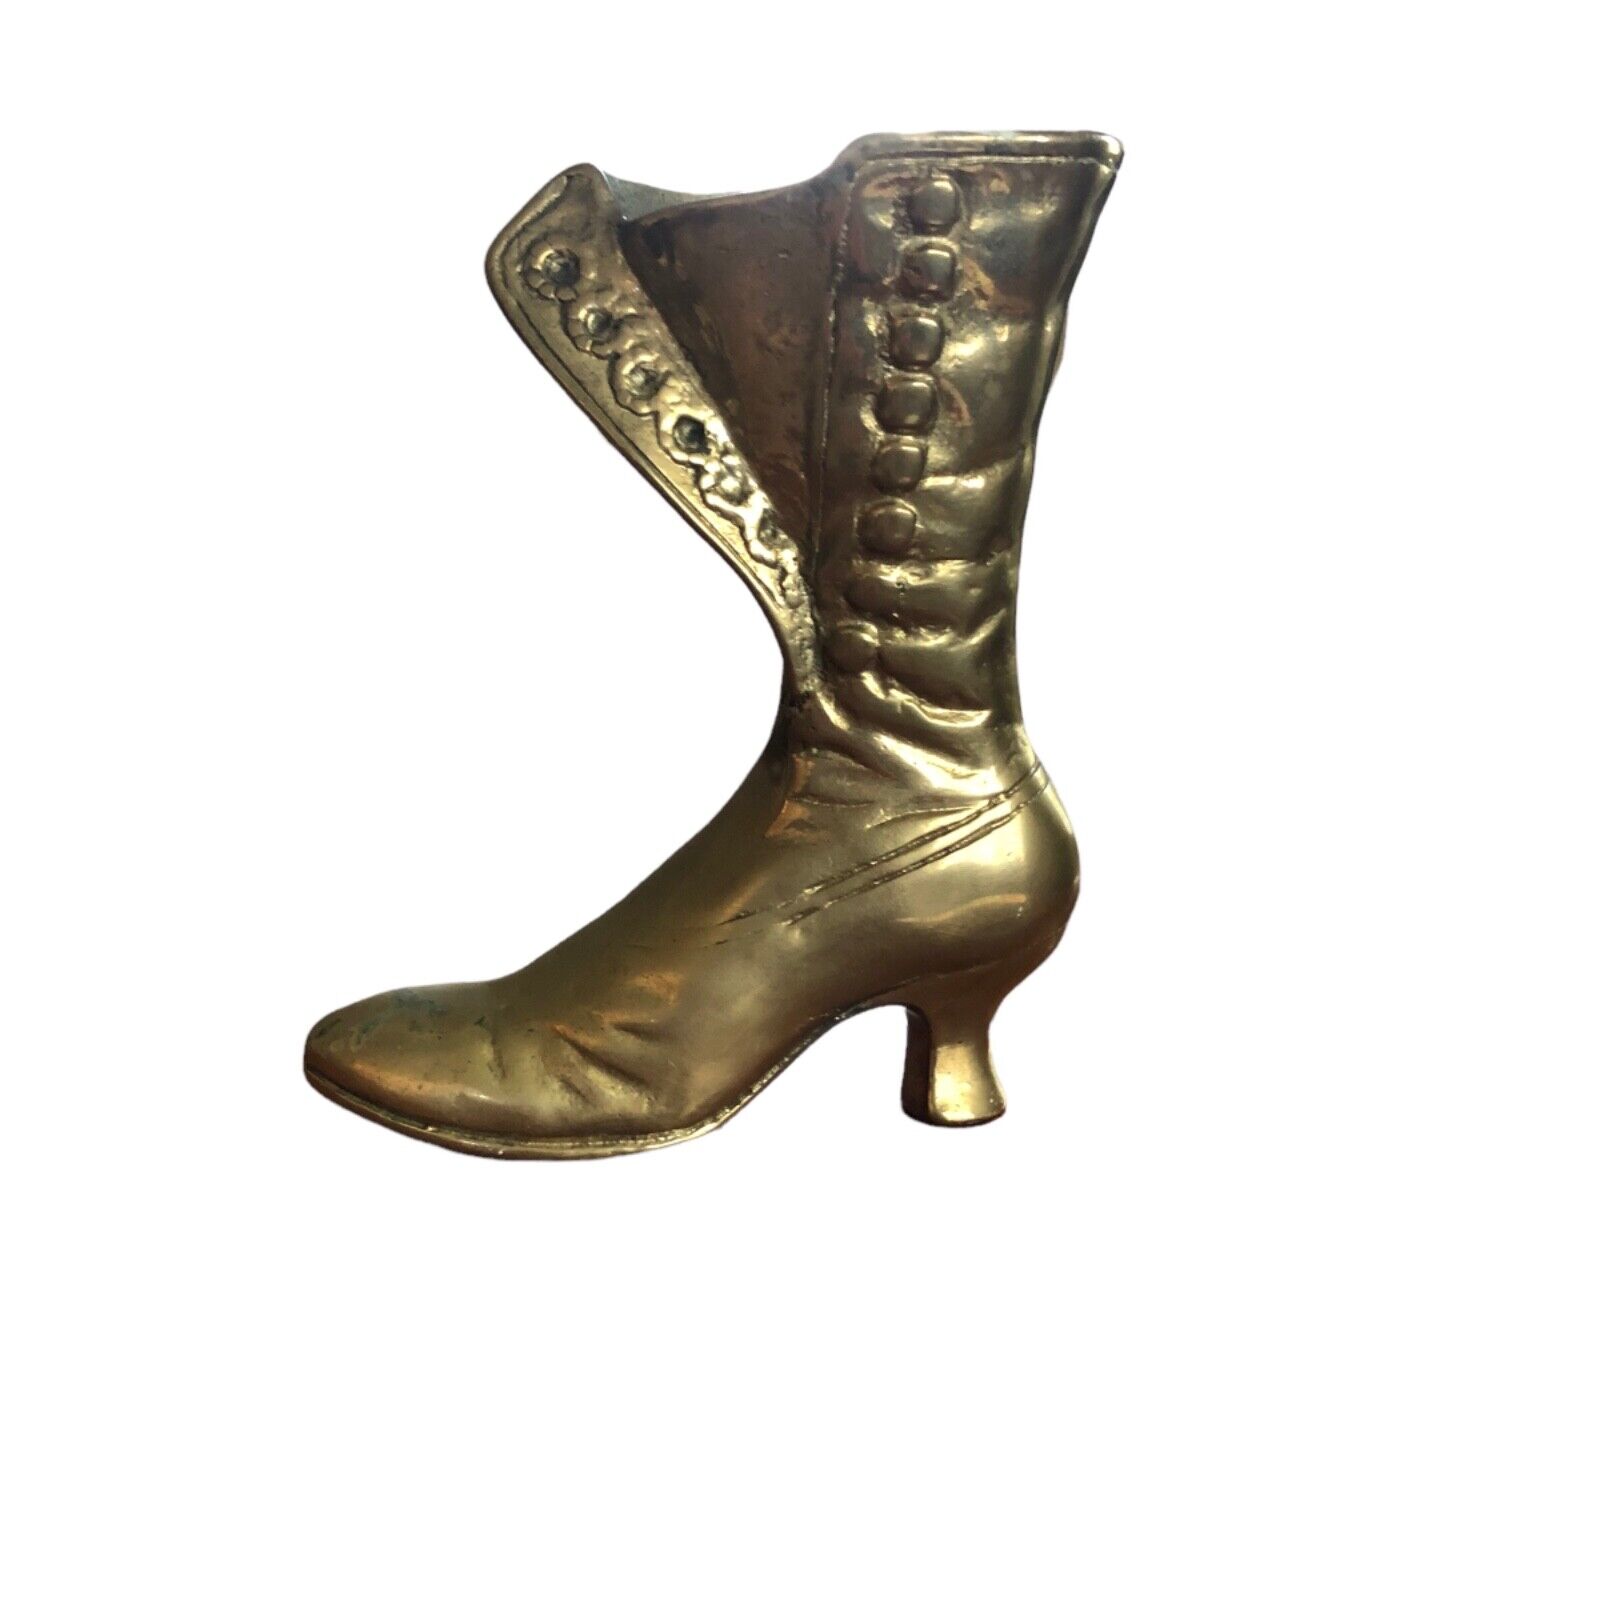 Cast Brass Posy Holder Boot Antique Victorian C1900